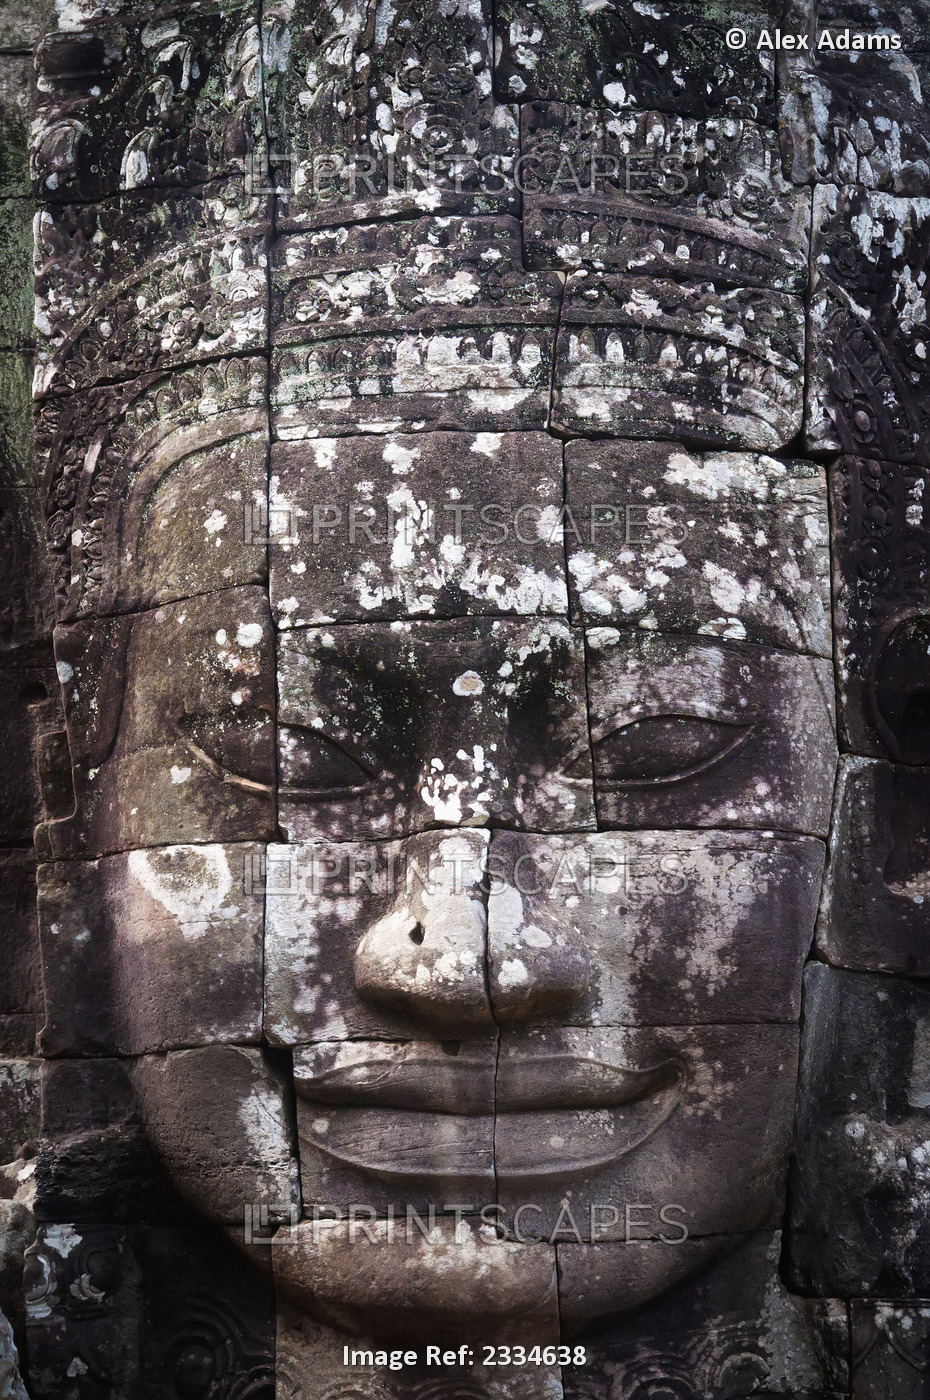 A face sculpture on a stone wall at angkor wat;Cambodia